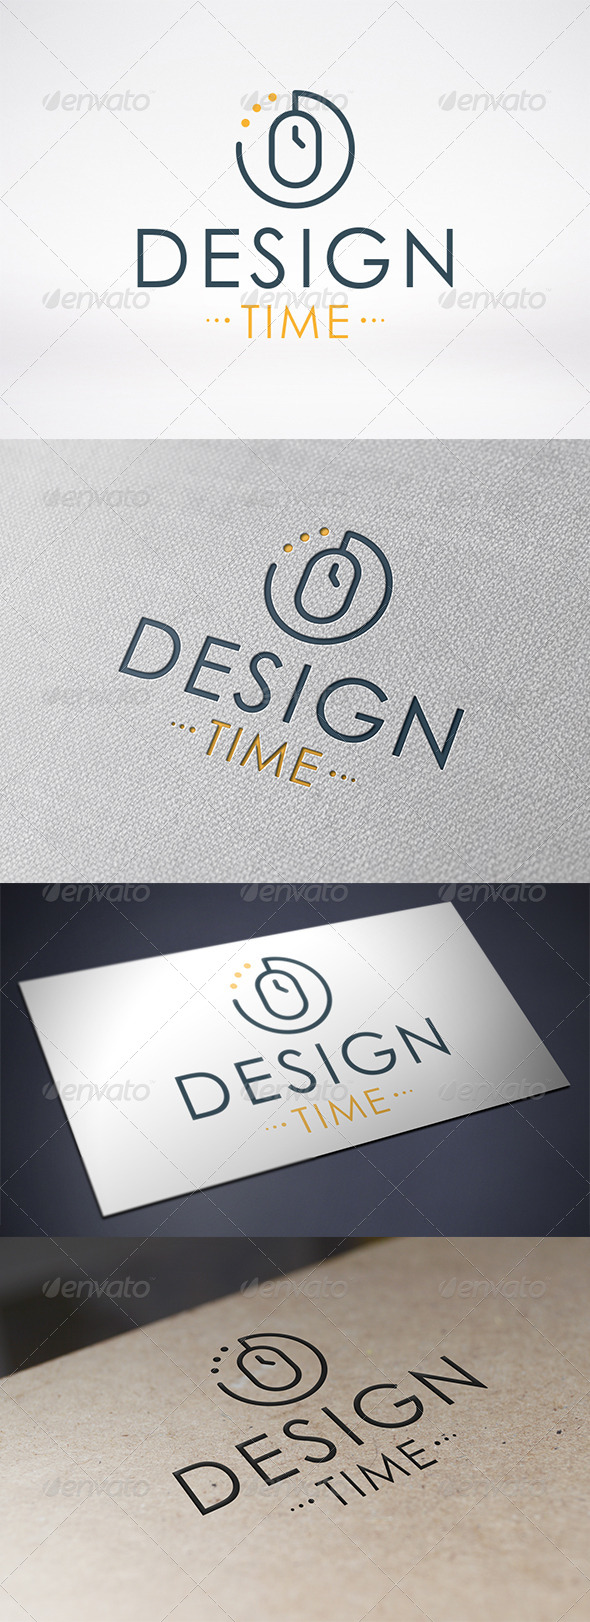 Design Time Logo Template